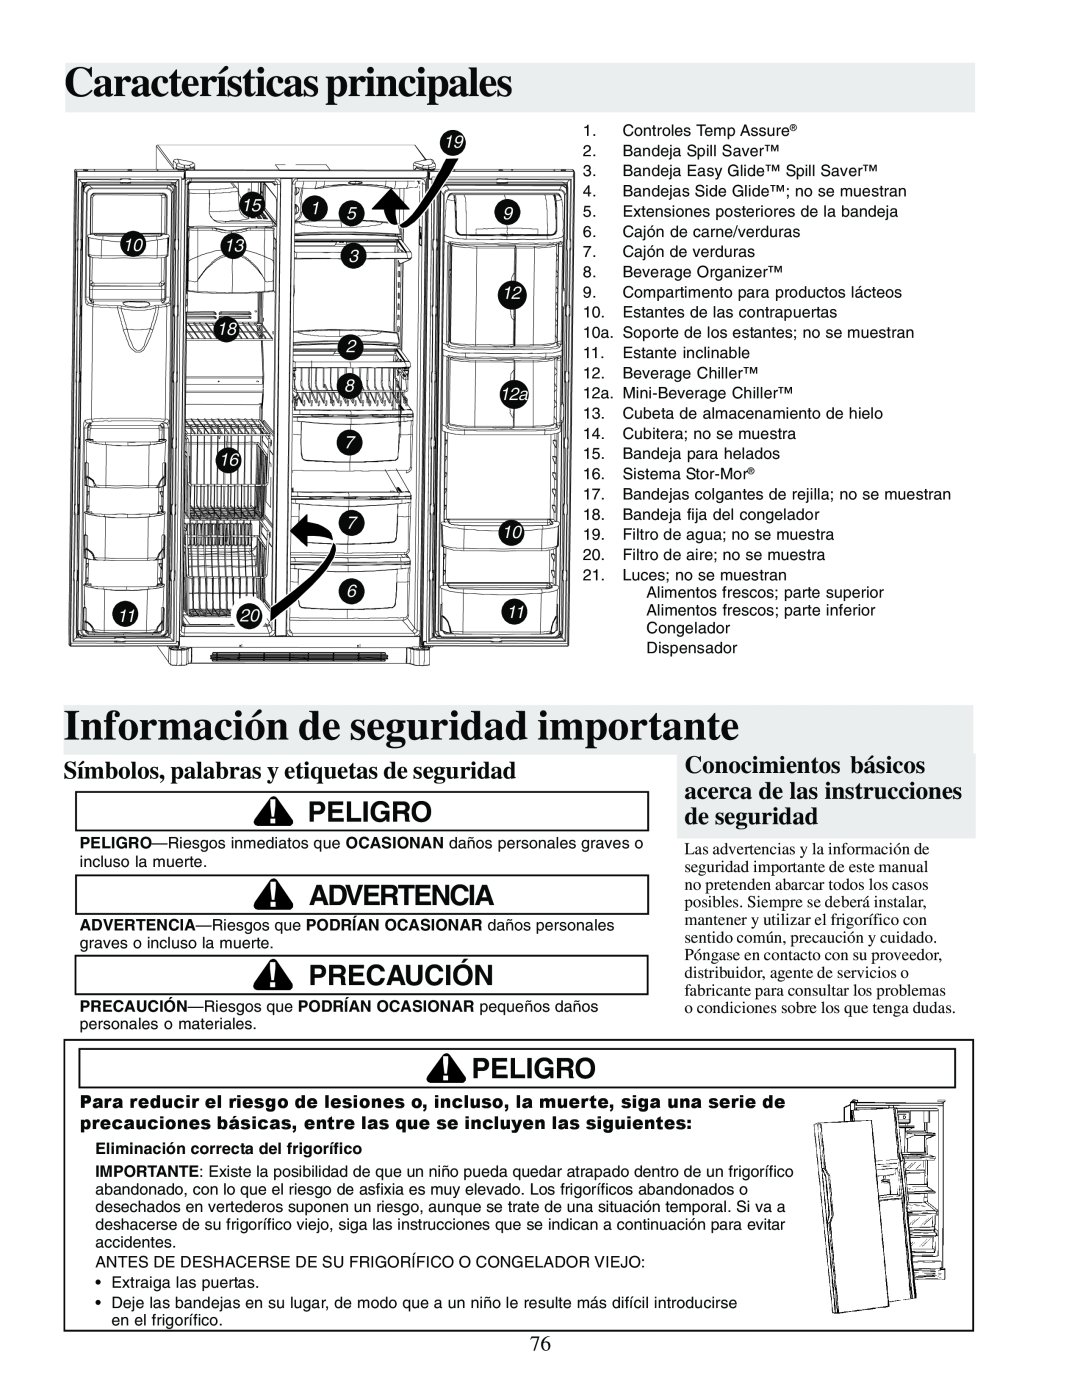 Amana XRSS687BB Características principales, Información de seguridad importante, Peligro, Advertencia, Precaución, 812a 